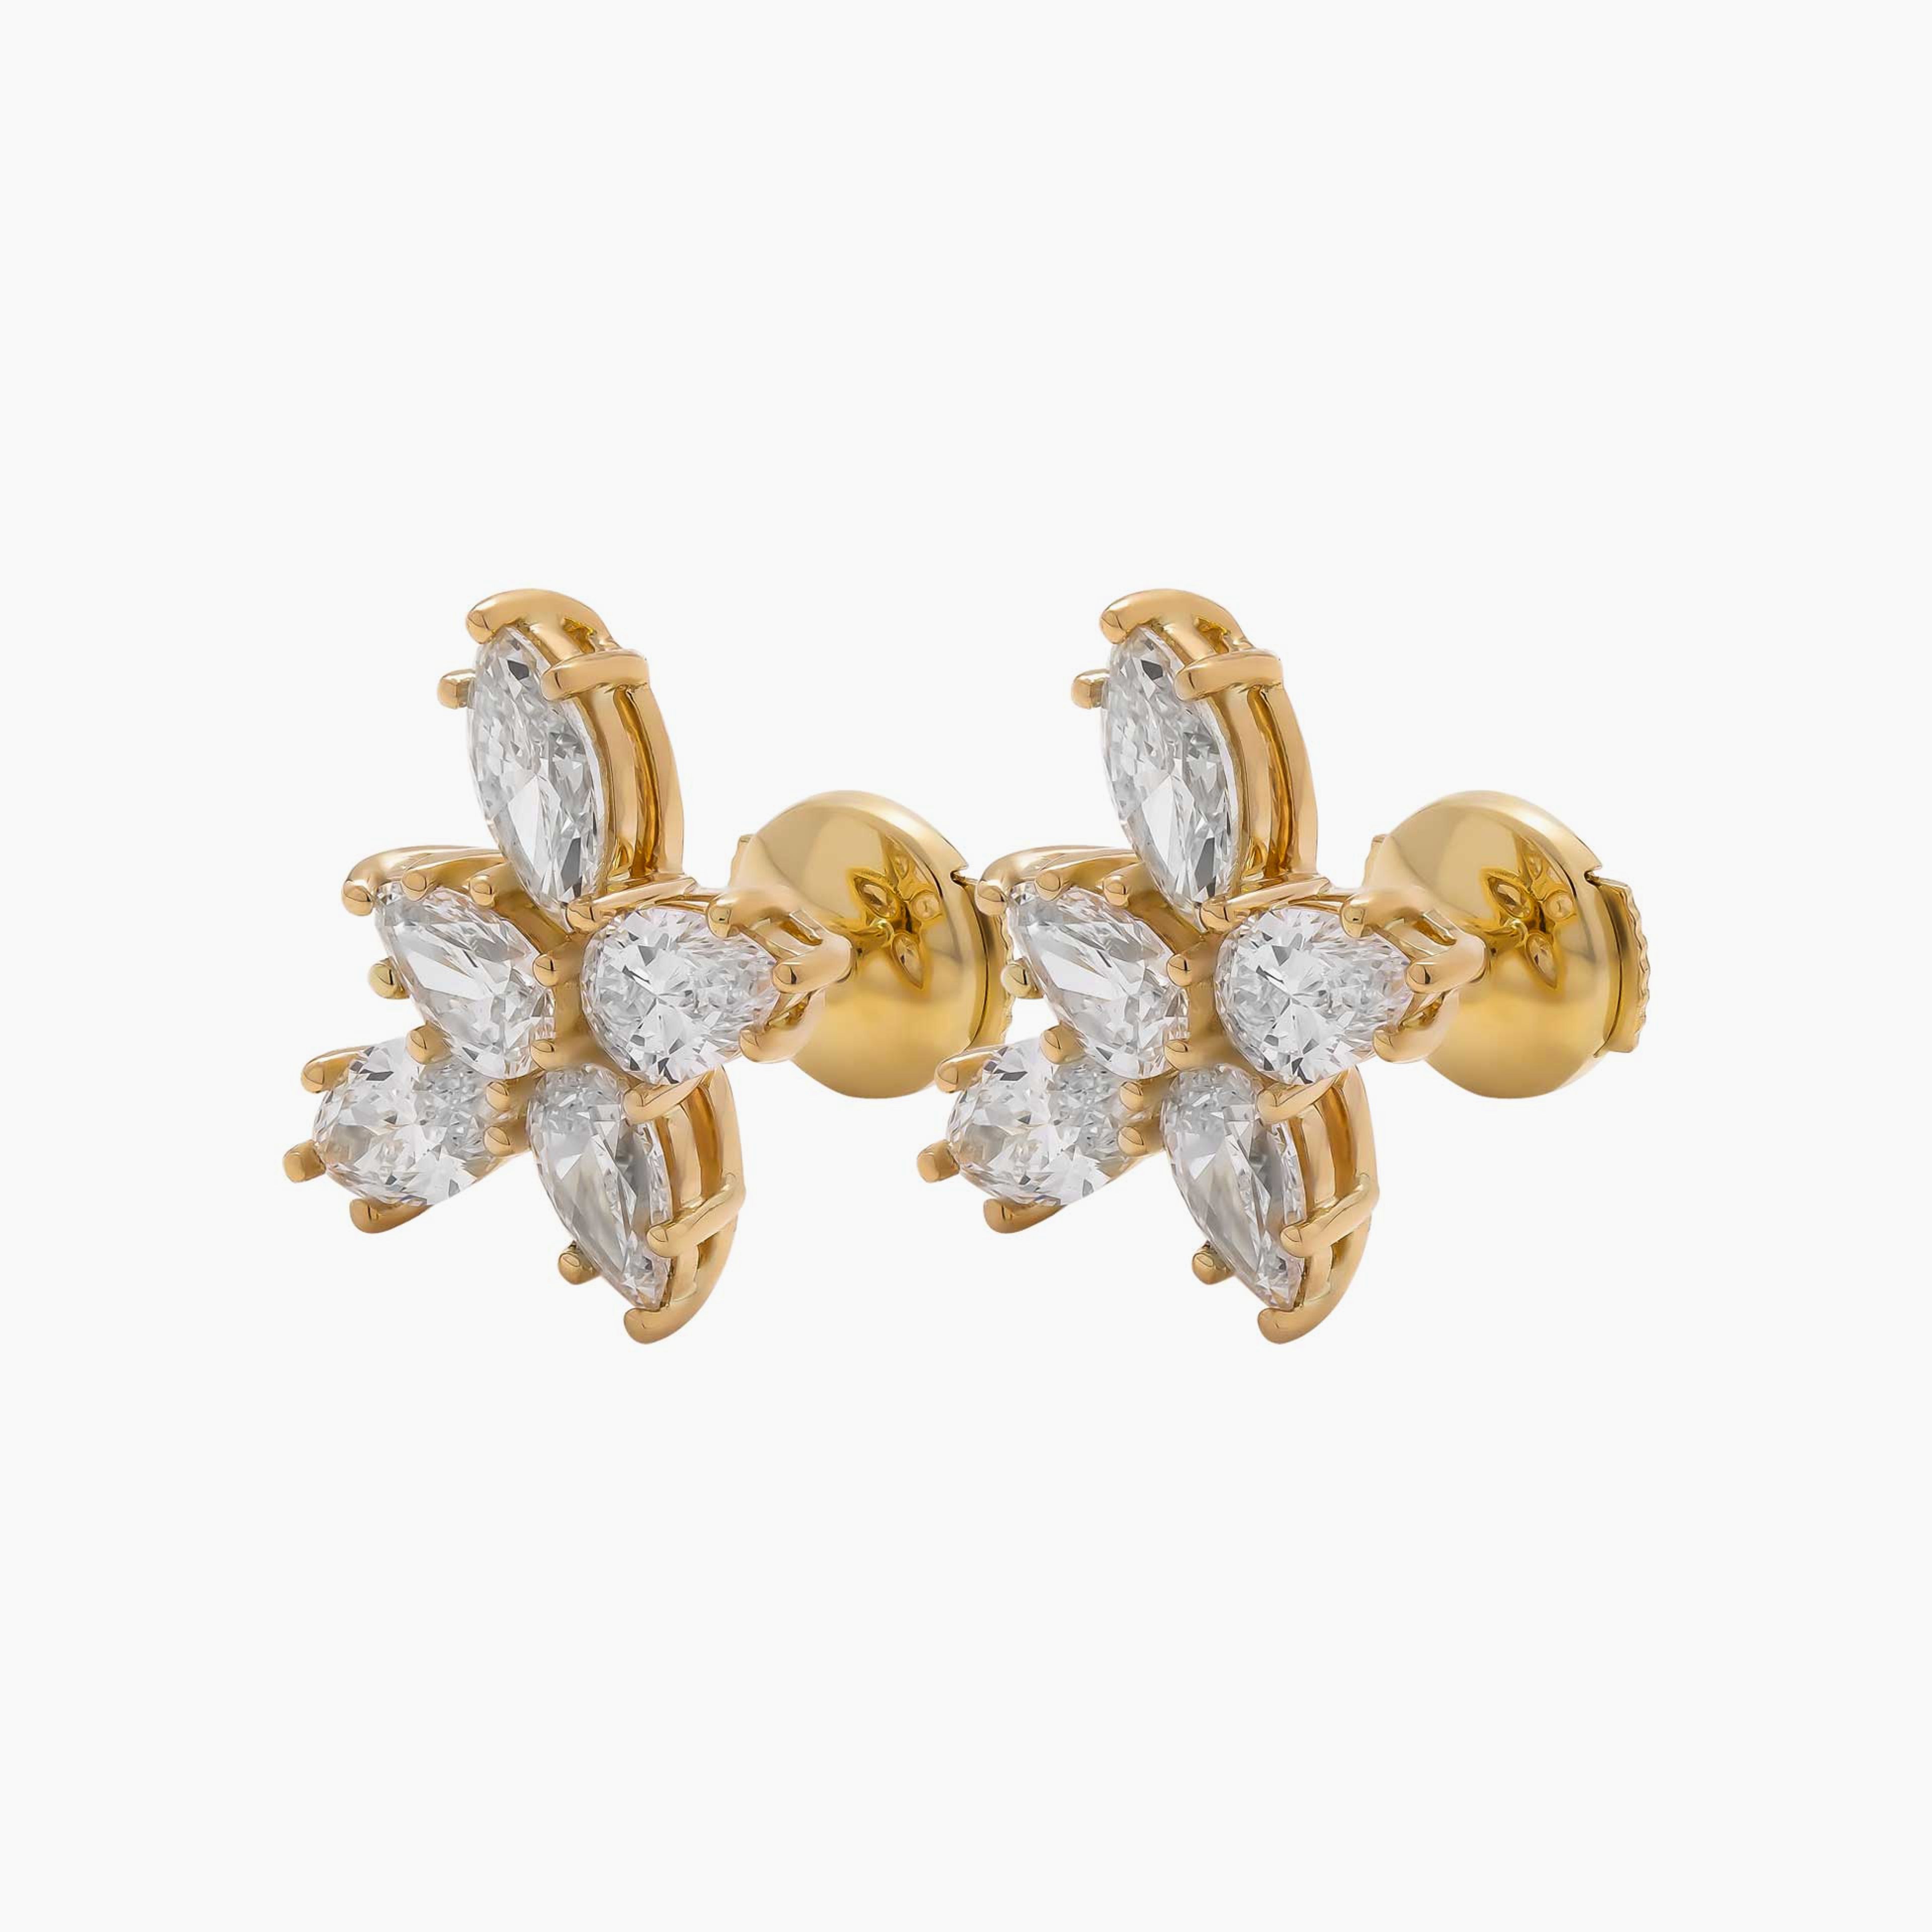 Large Cluster Diamond Earrings in 18K Yellow Gold